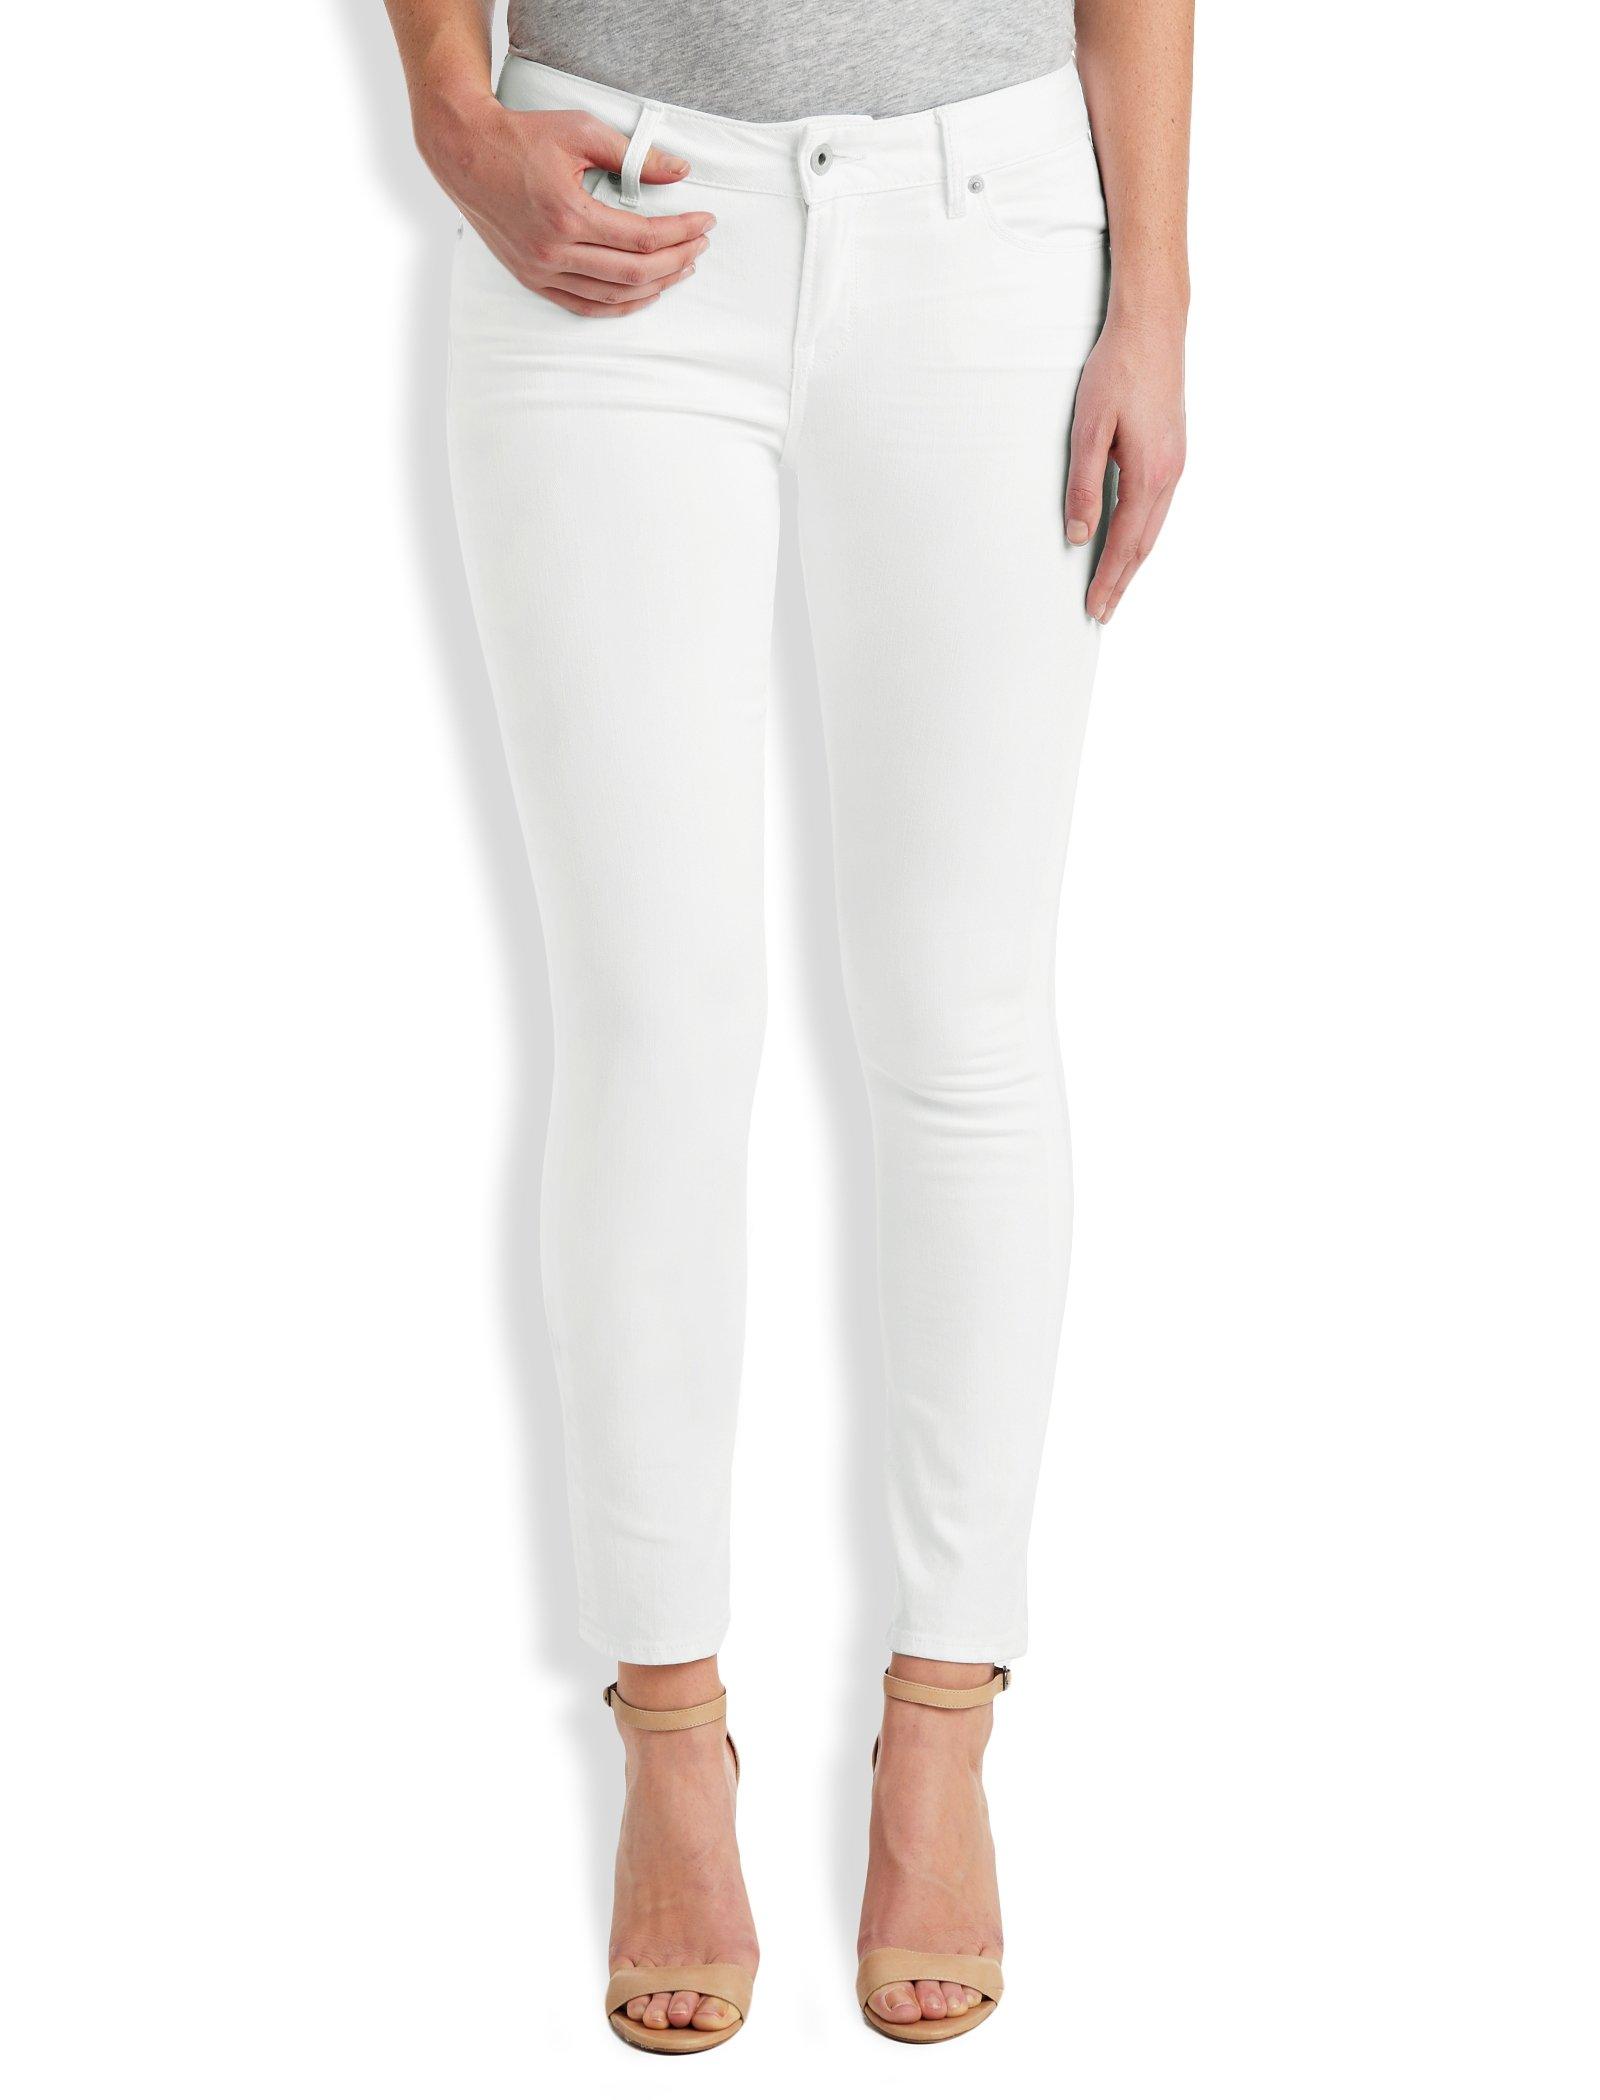 lucky brand white skinny jeans